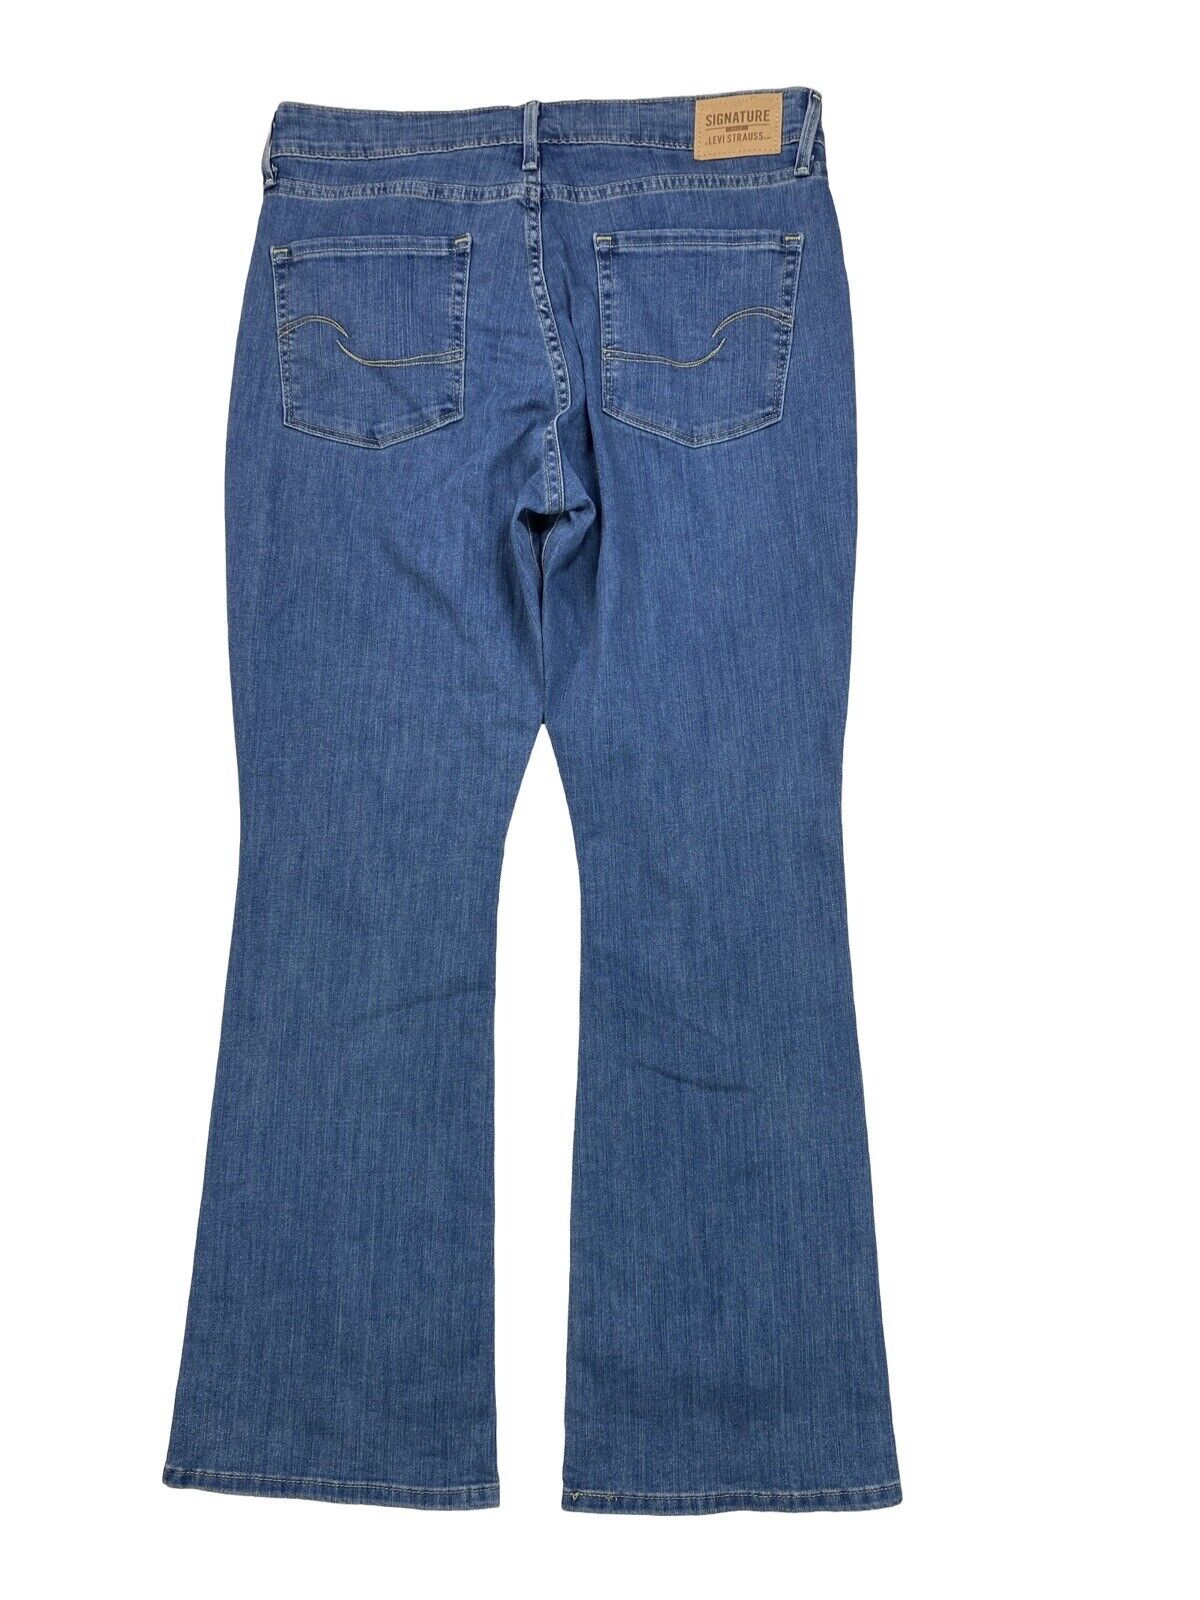 Levi's Signature Women's Medium Wash Shaping Boot Cut Jeans - 14 Short